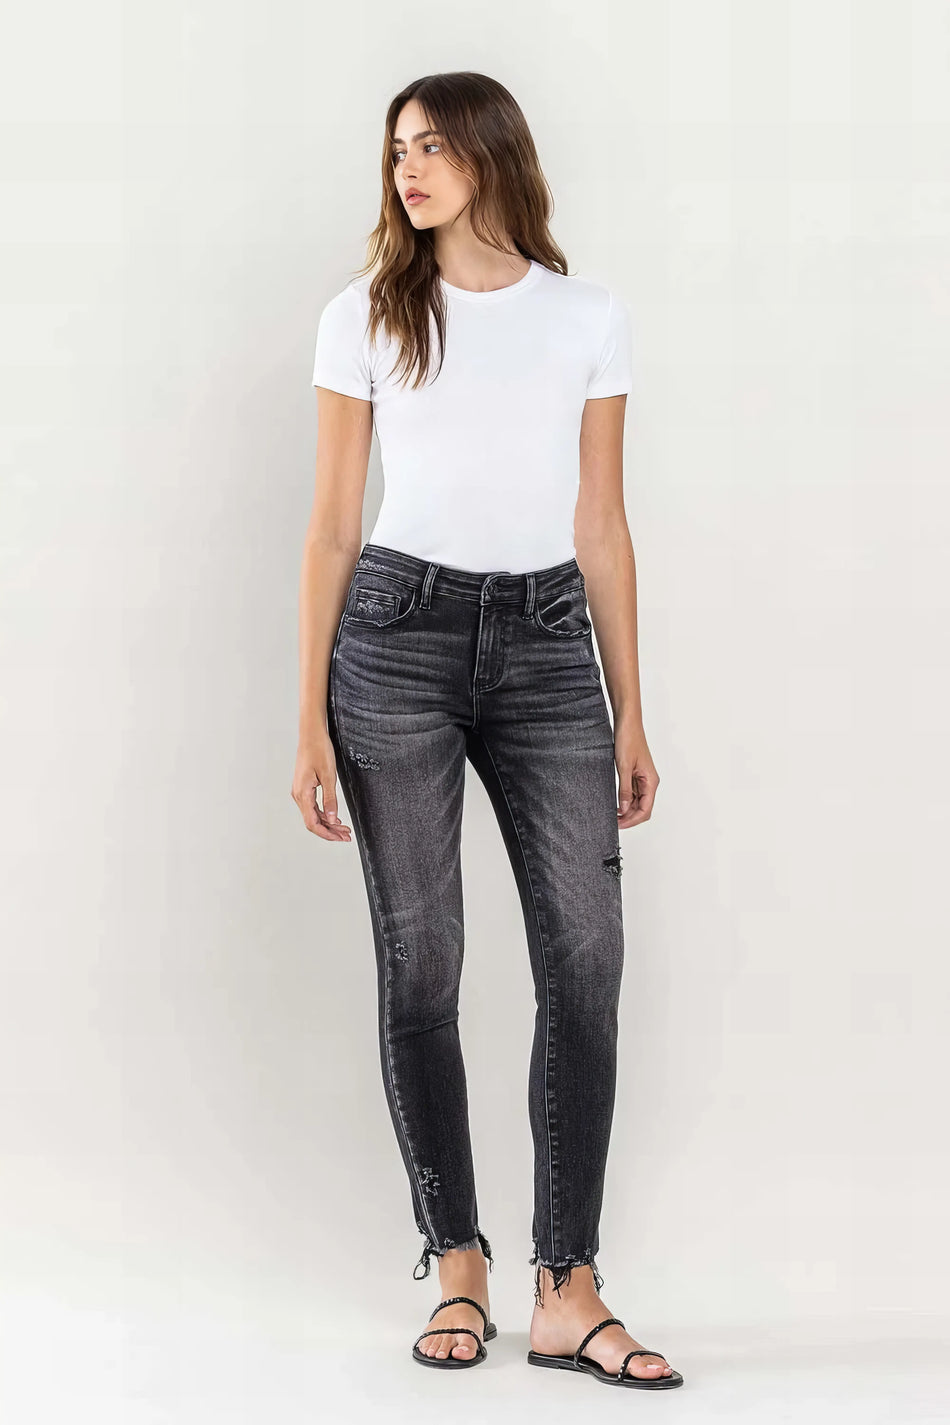 RawSway Skinny Crop Jeans